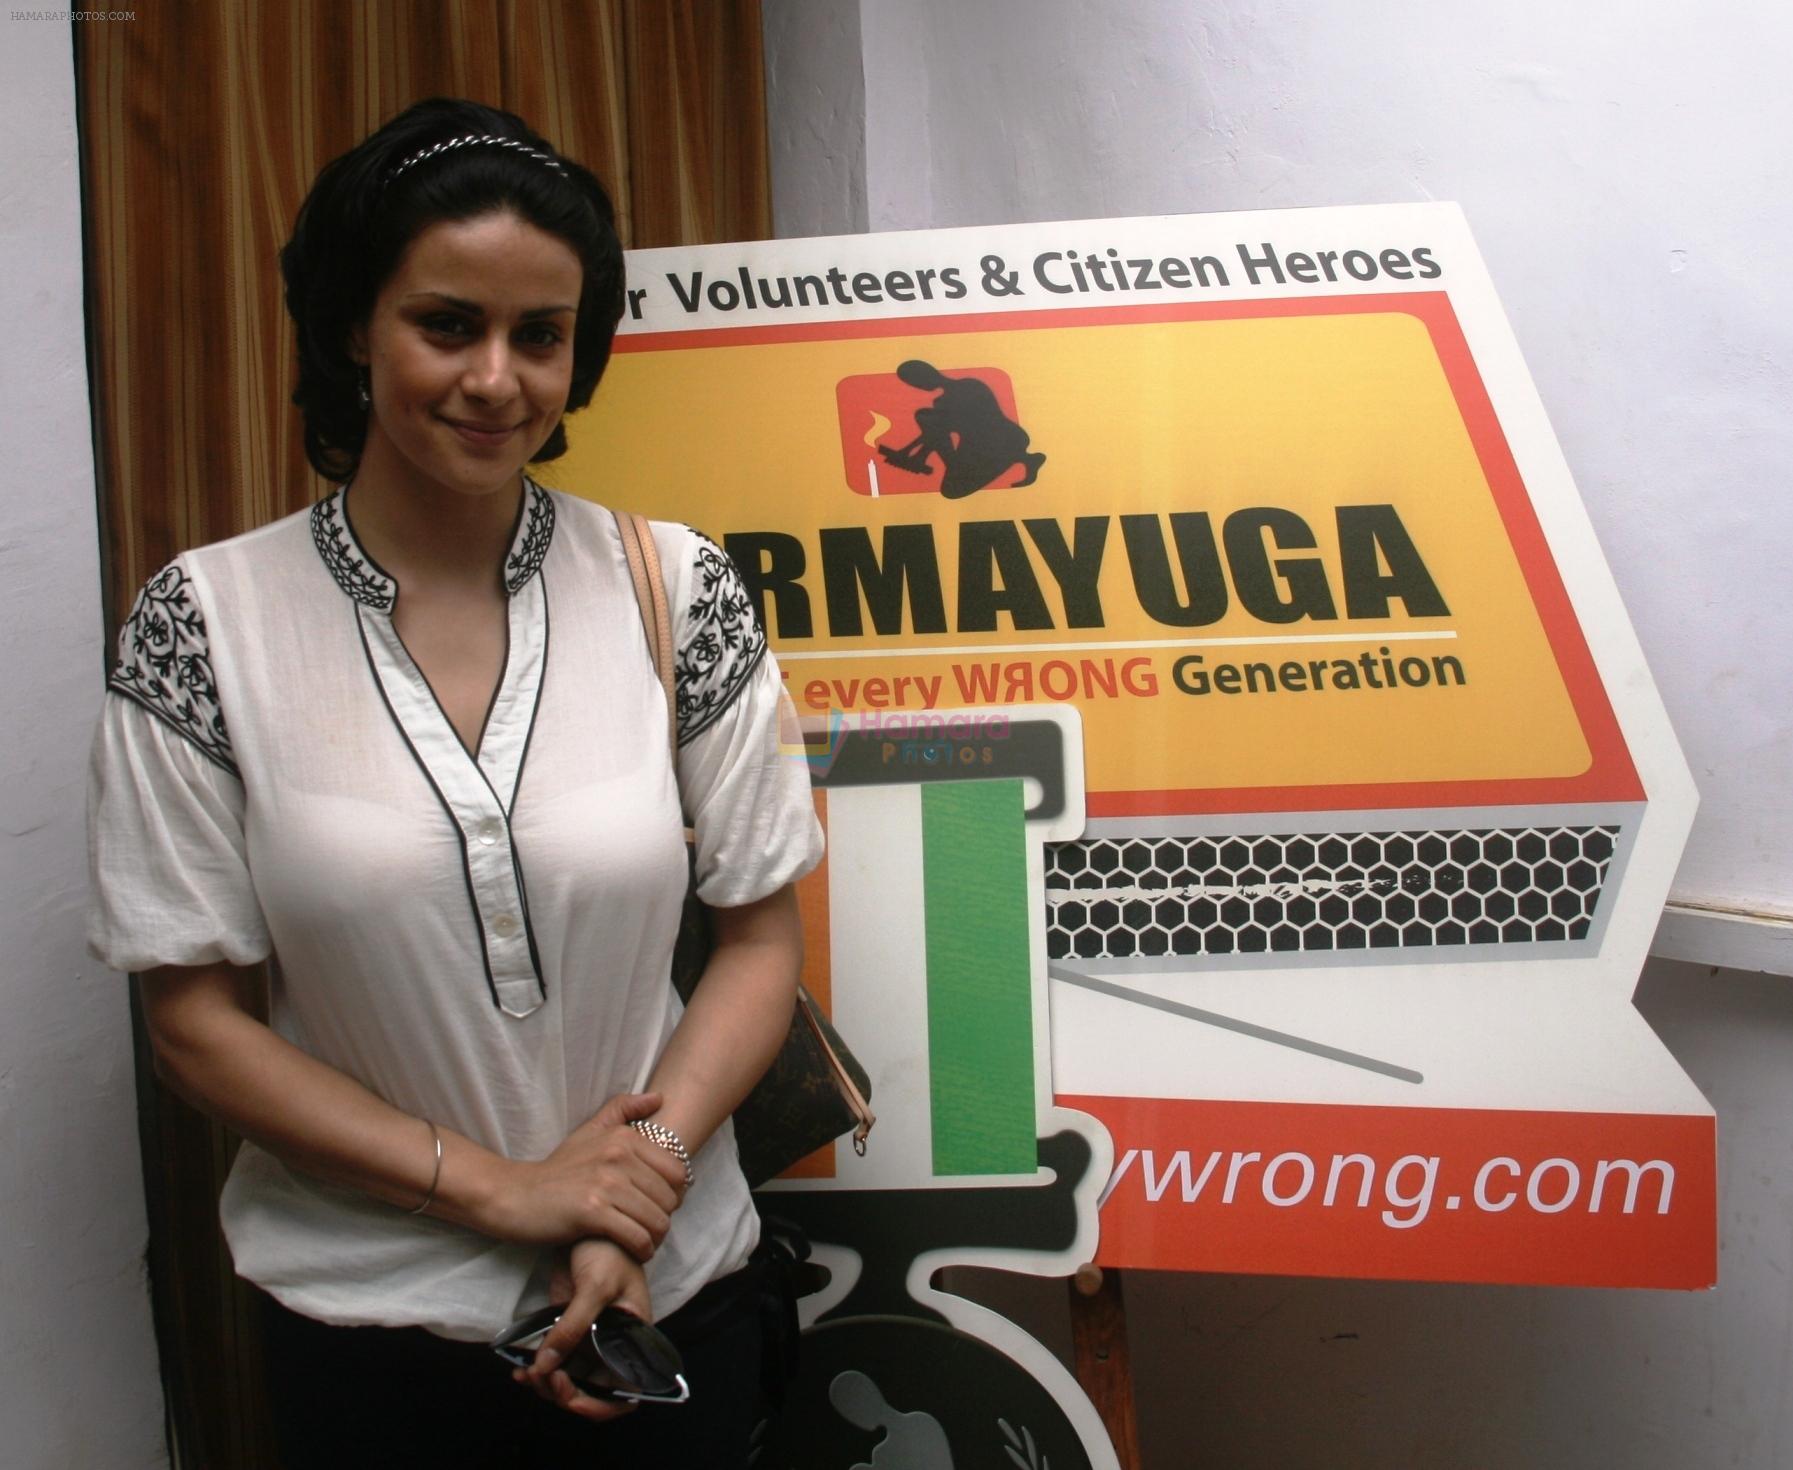 Gul Panag started the Real life Hero's campaign - Karmayuga in Mumbai on 14th Oct 2011